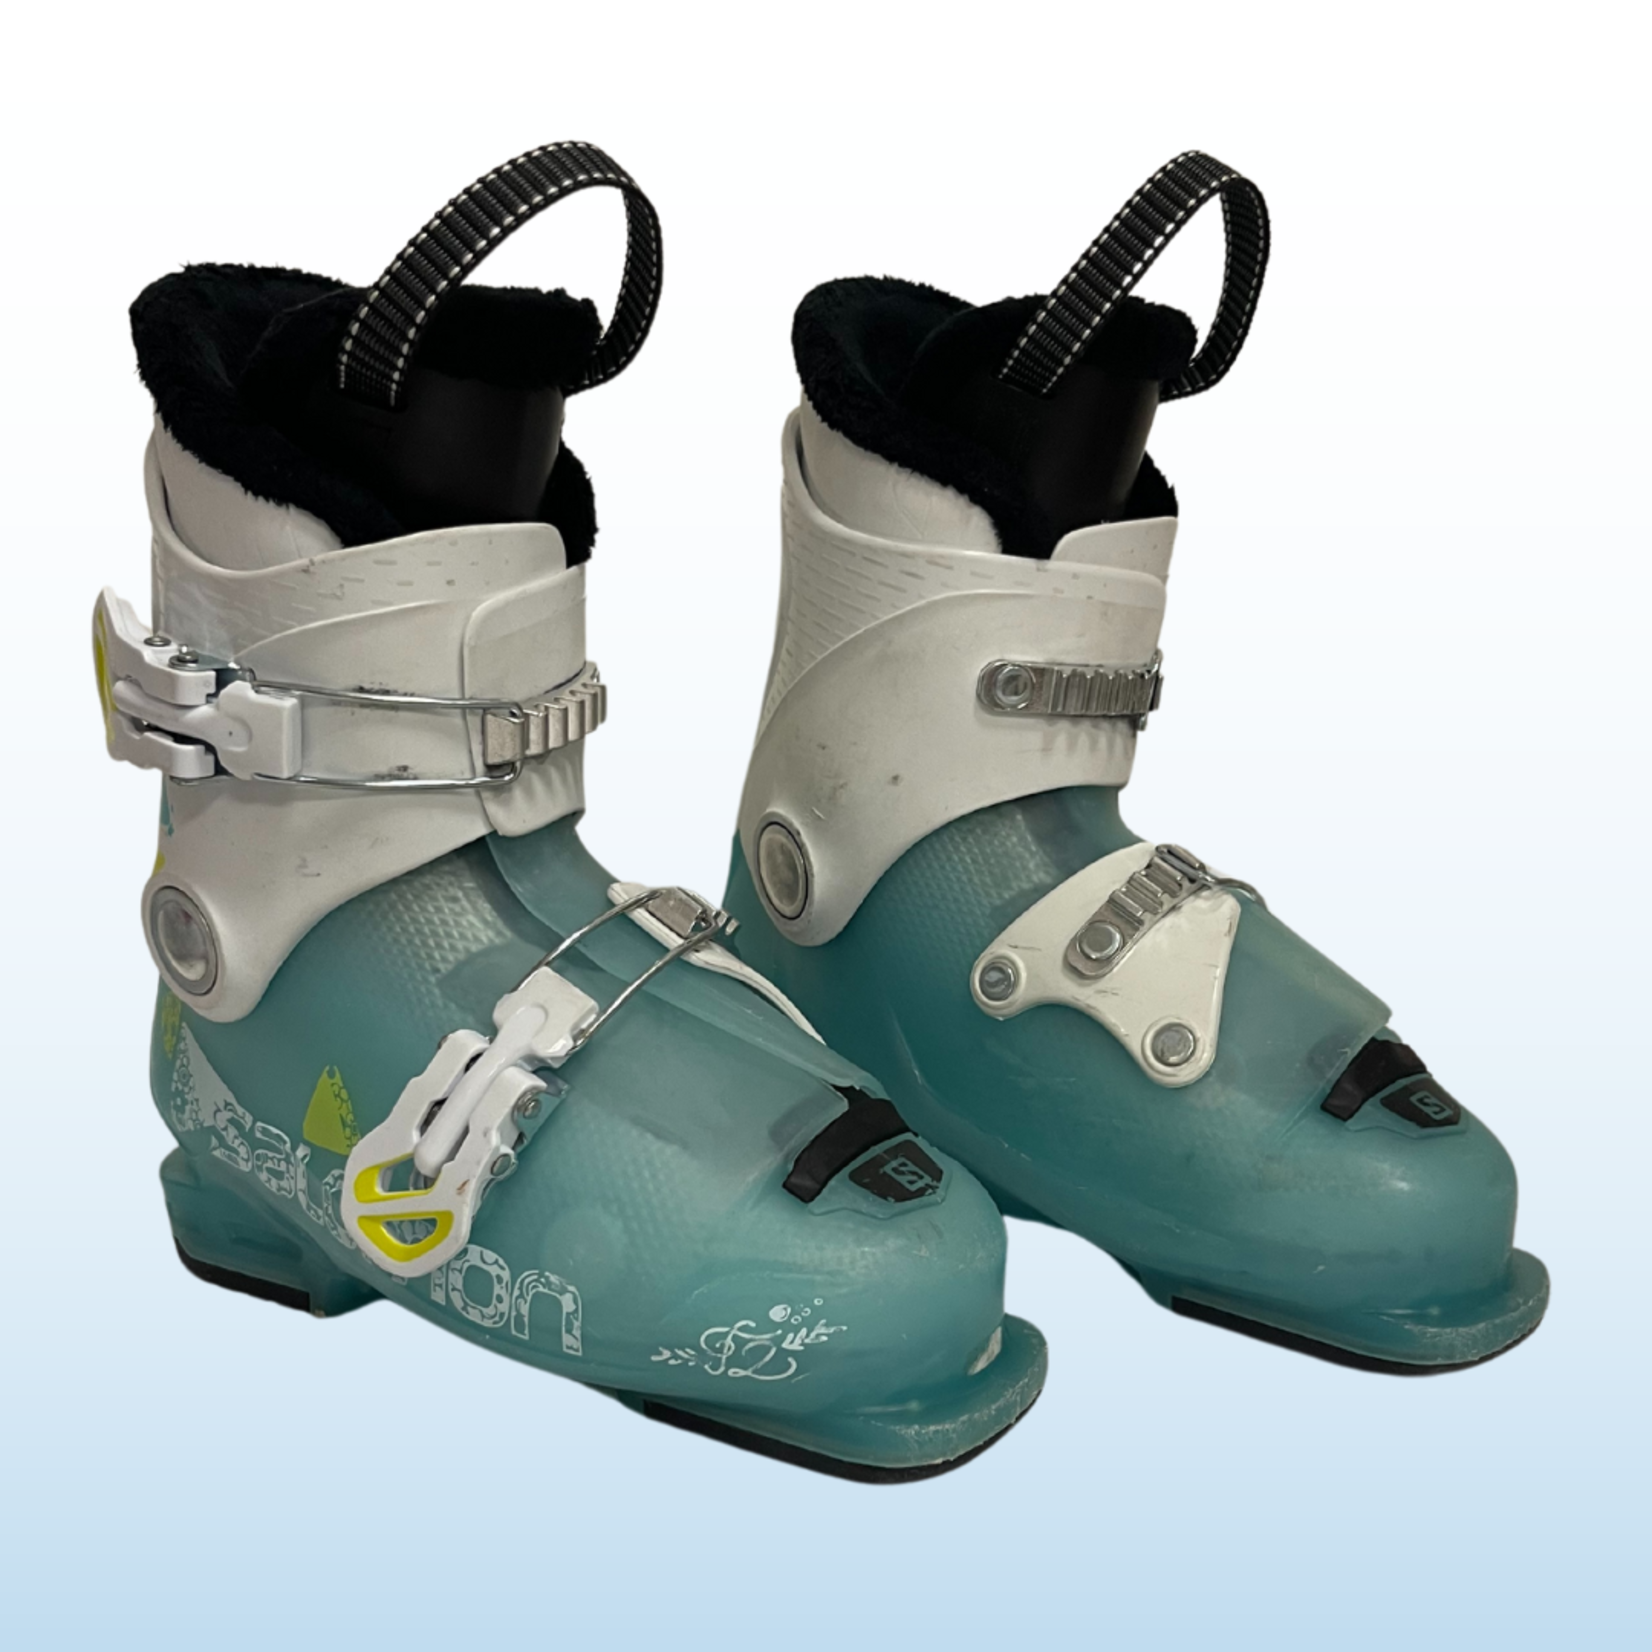 Salomon Salomon F3 Kids Ski Boots, Size 21